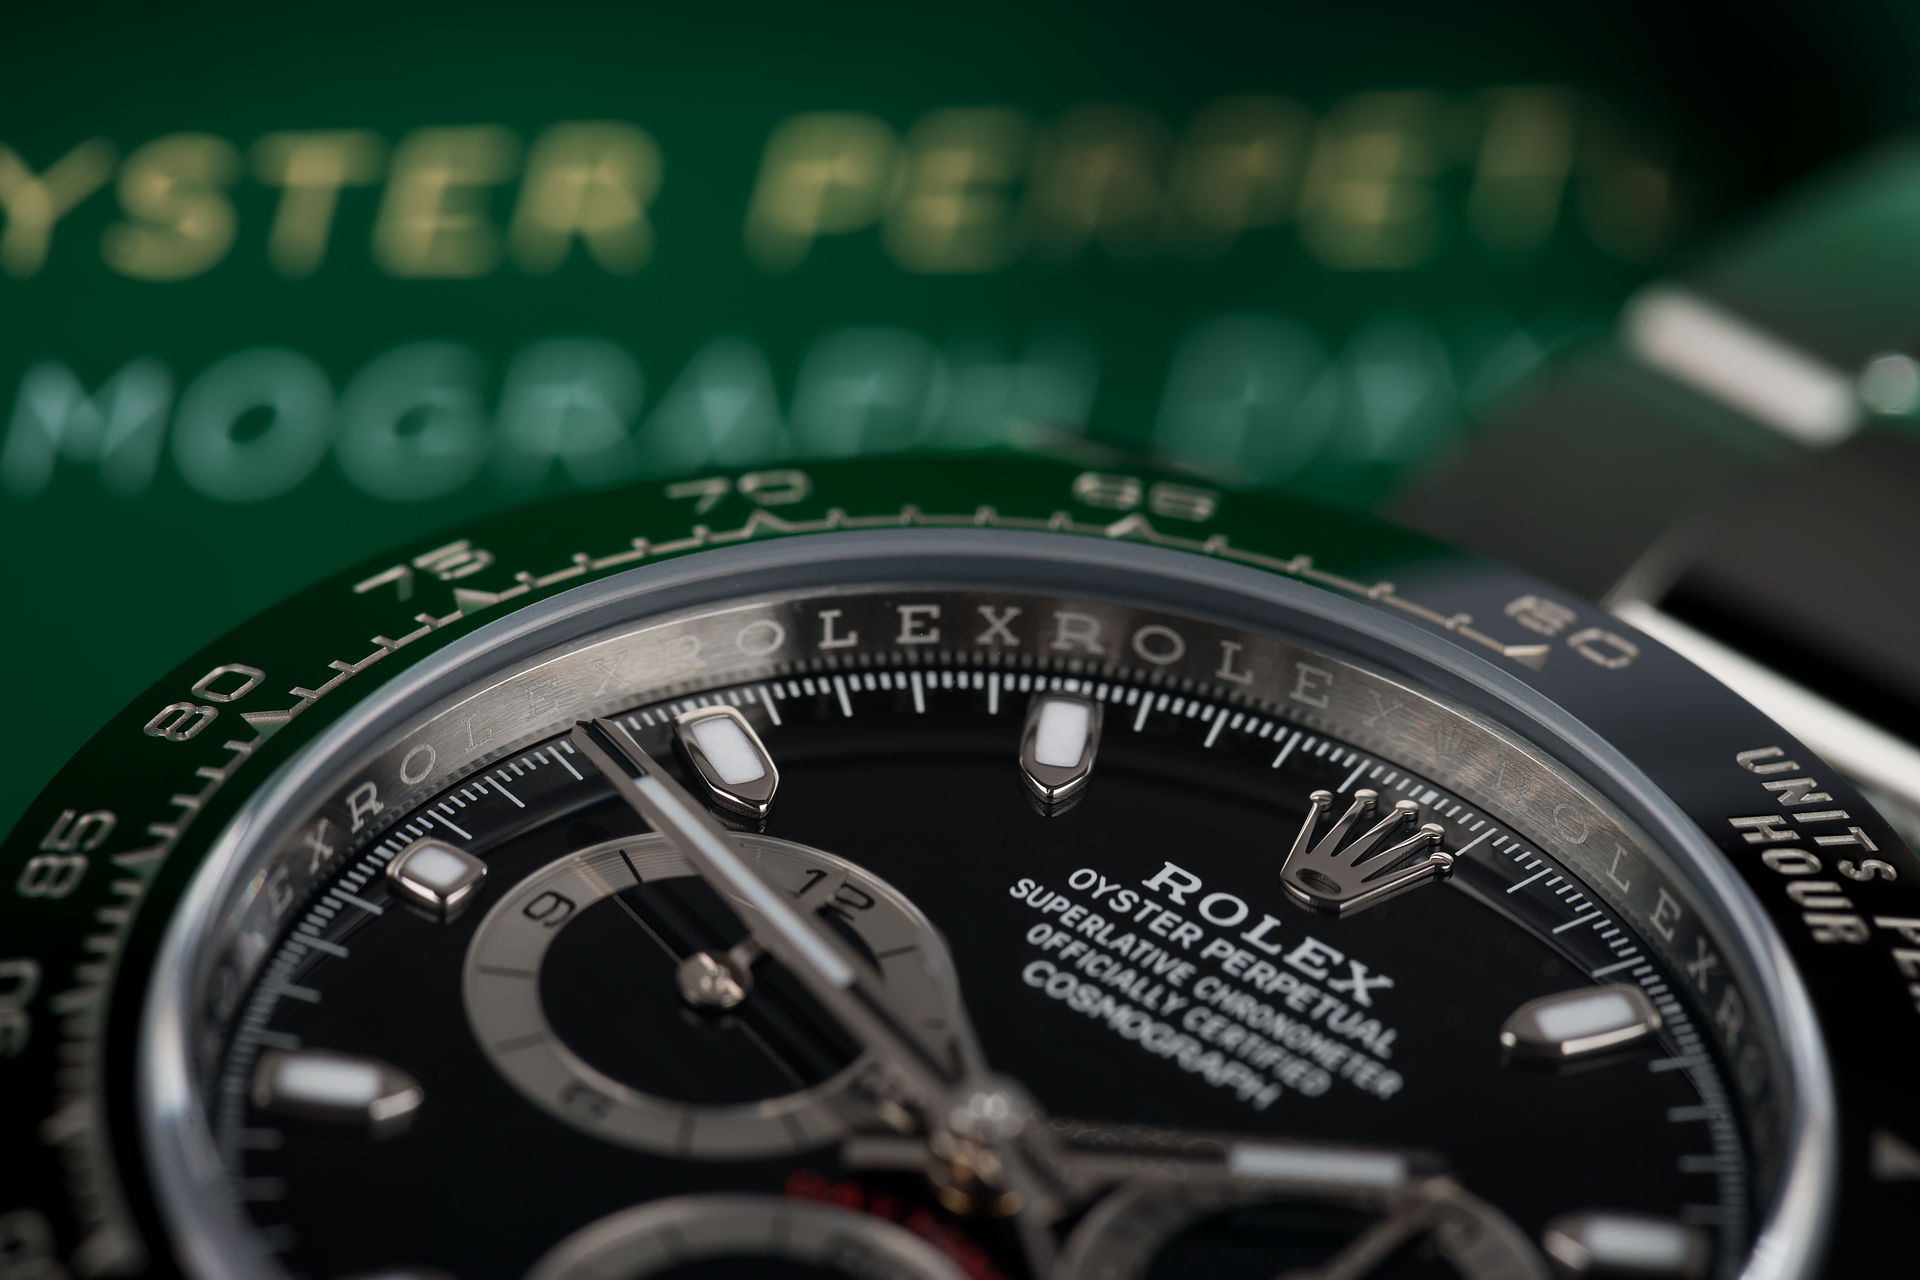 ref 116500LN | “Fully stickered”  | Rolex Cosmograph Daytona